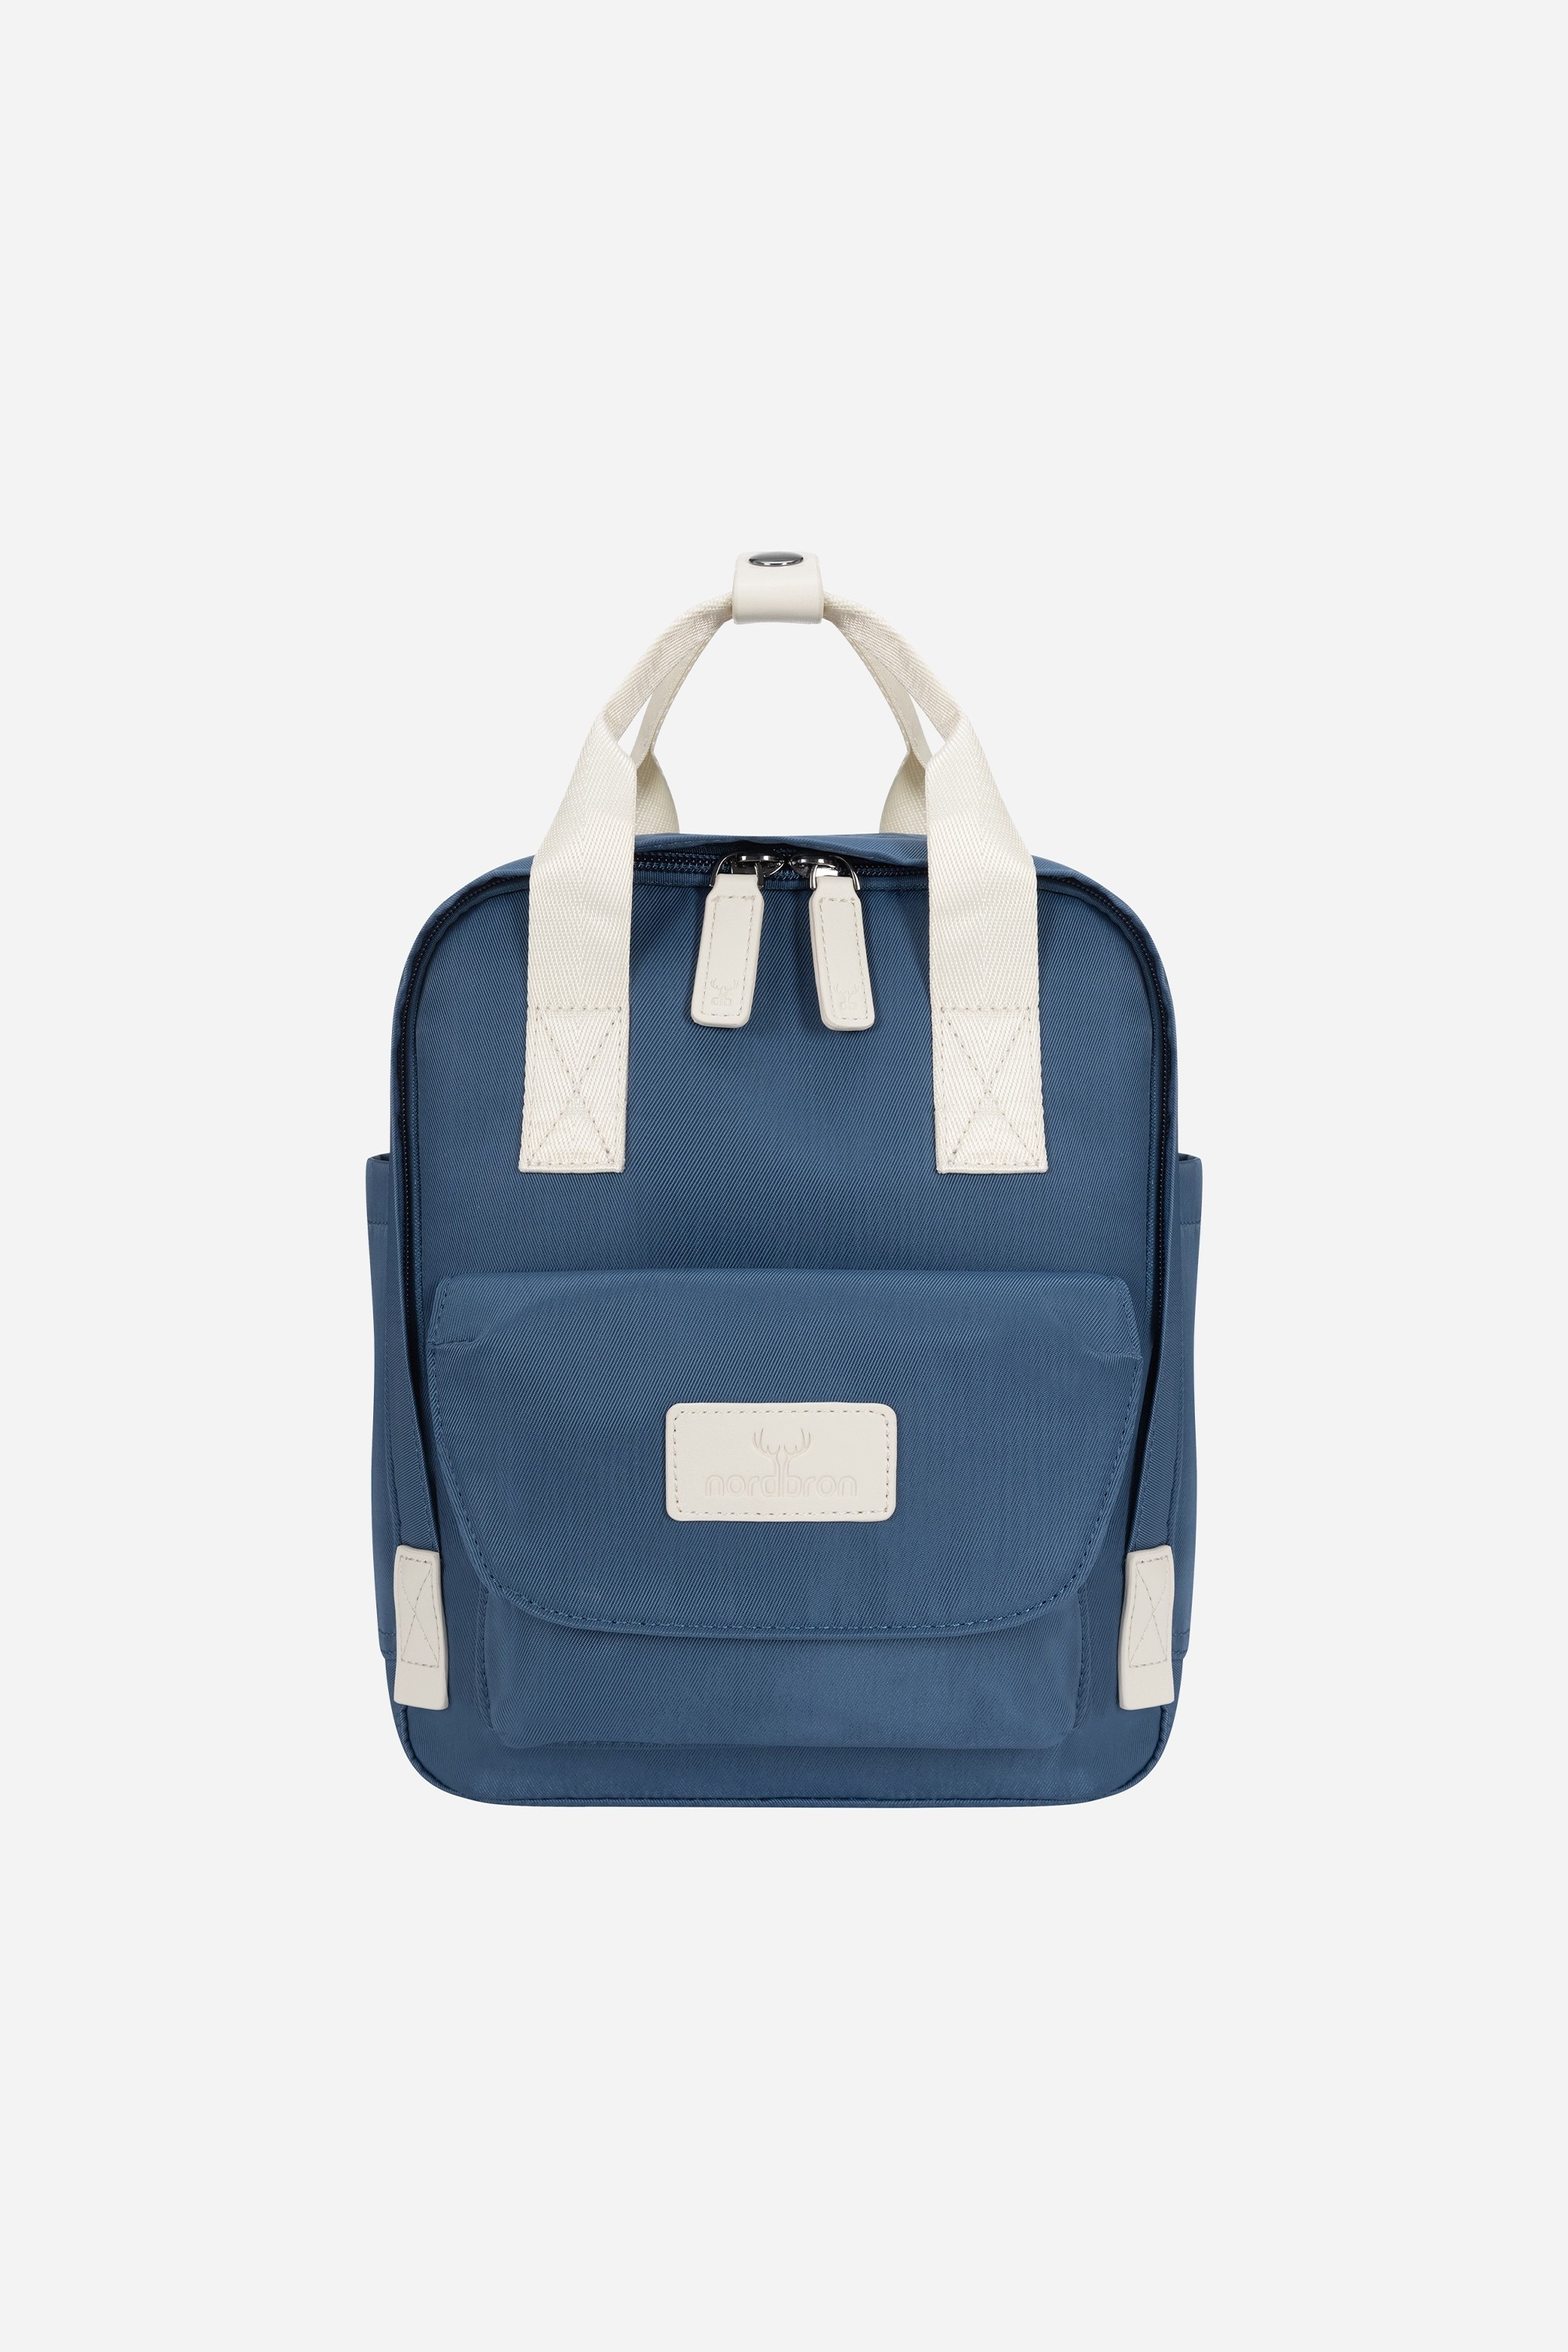 Lucerne Nordbron Mini Backpack - Indigo